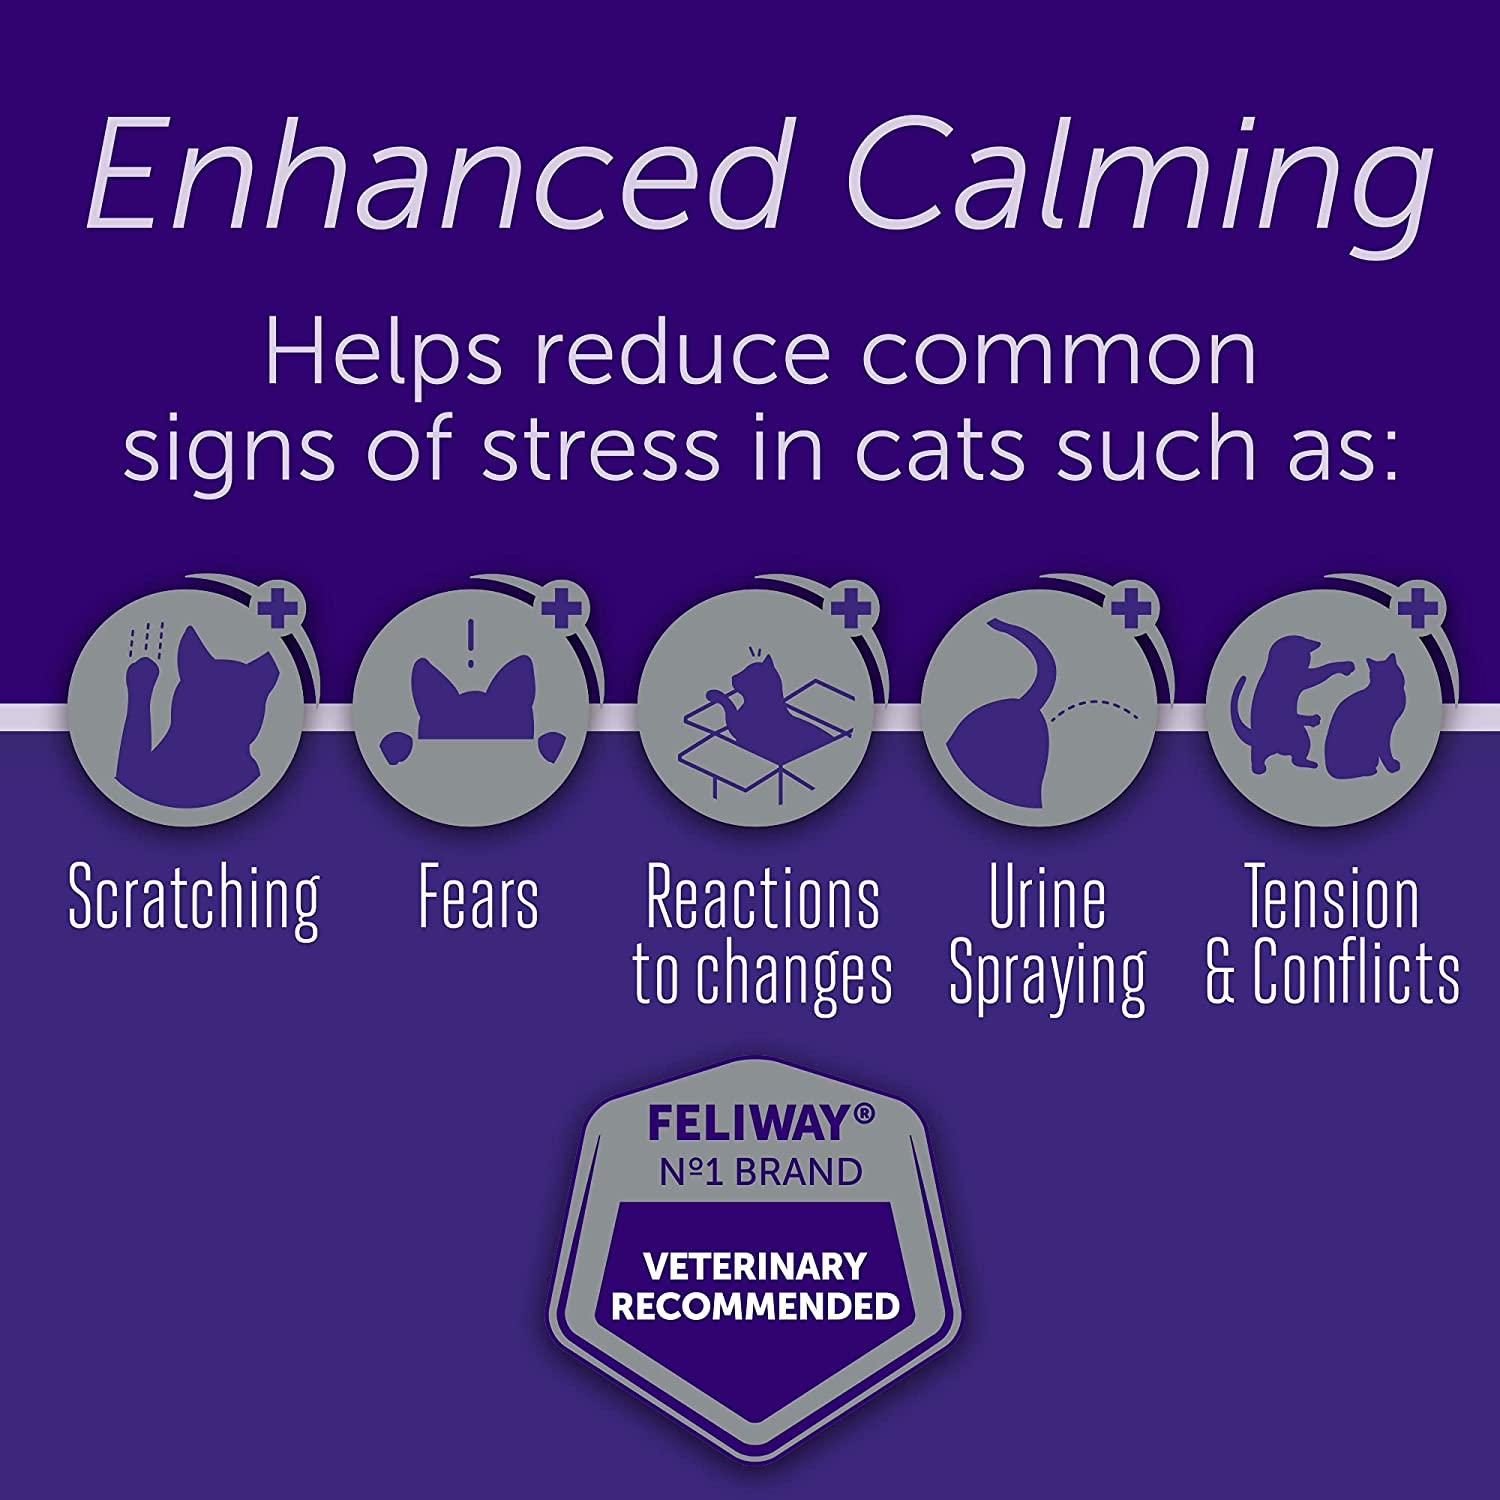 FELIWAY Optimum Cat, Enhanced Calming Pheromone Diffuser, 30 Day Starter  Kit (48 mL), Translucent 